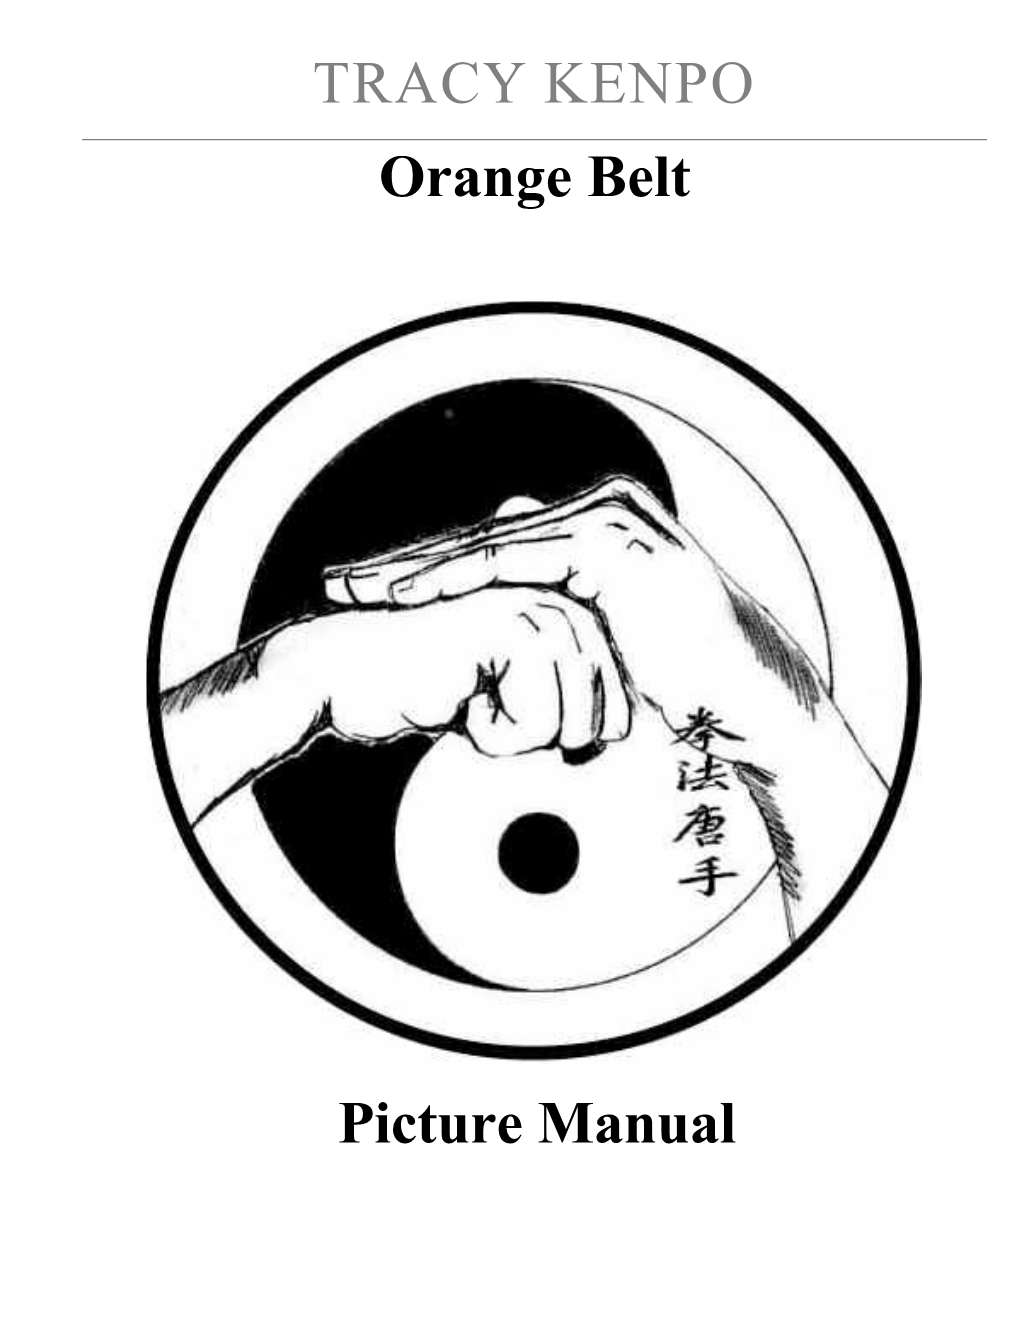 TRACY KENPO Orange Belt Picture Manual